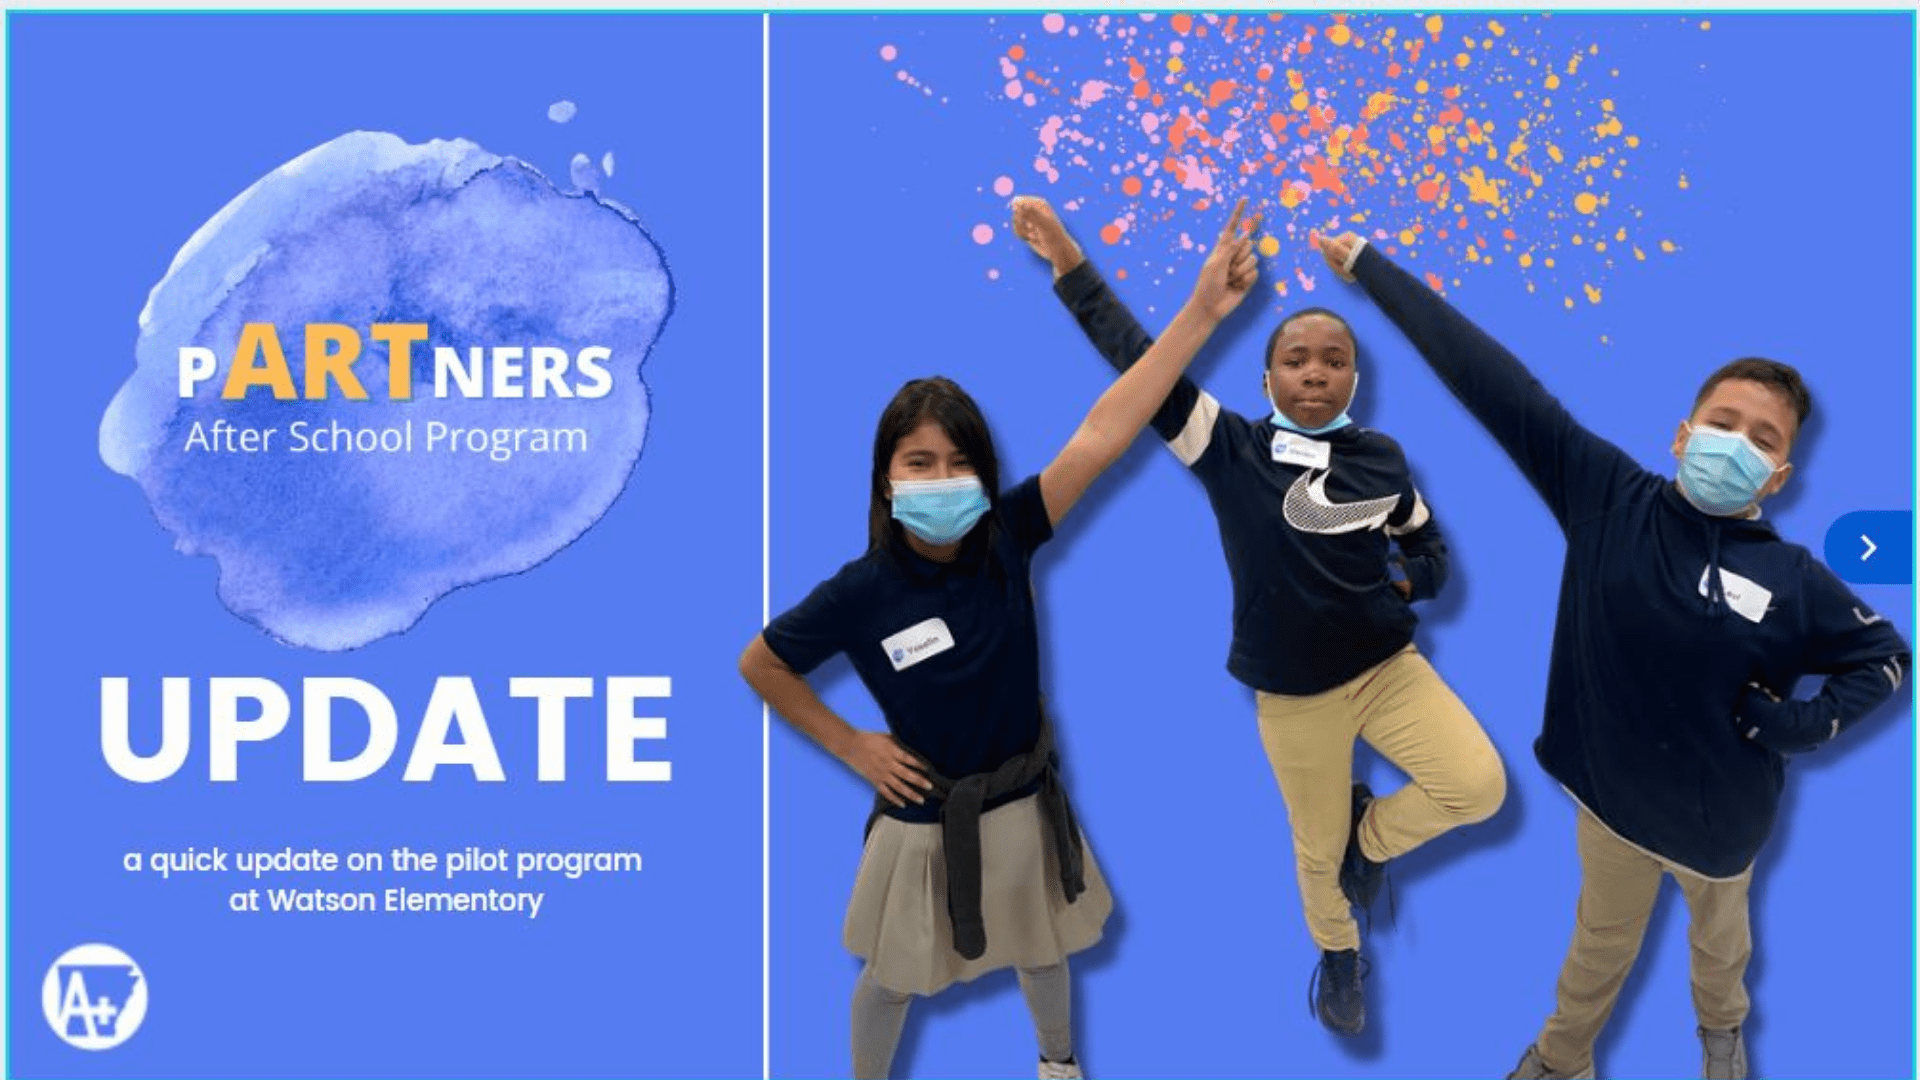 3 children under confetti | Pilot Program Update | April 15, 2022